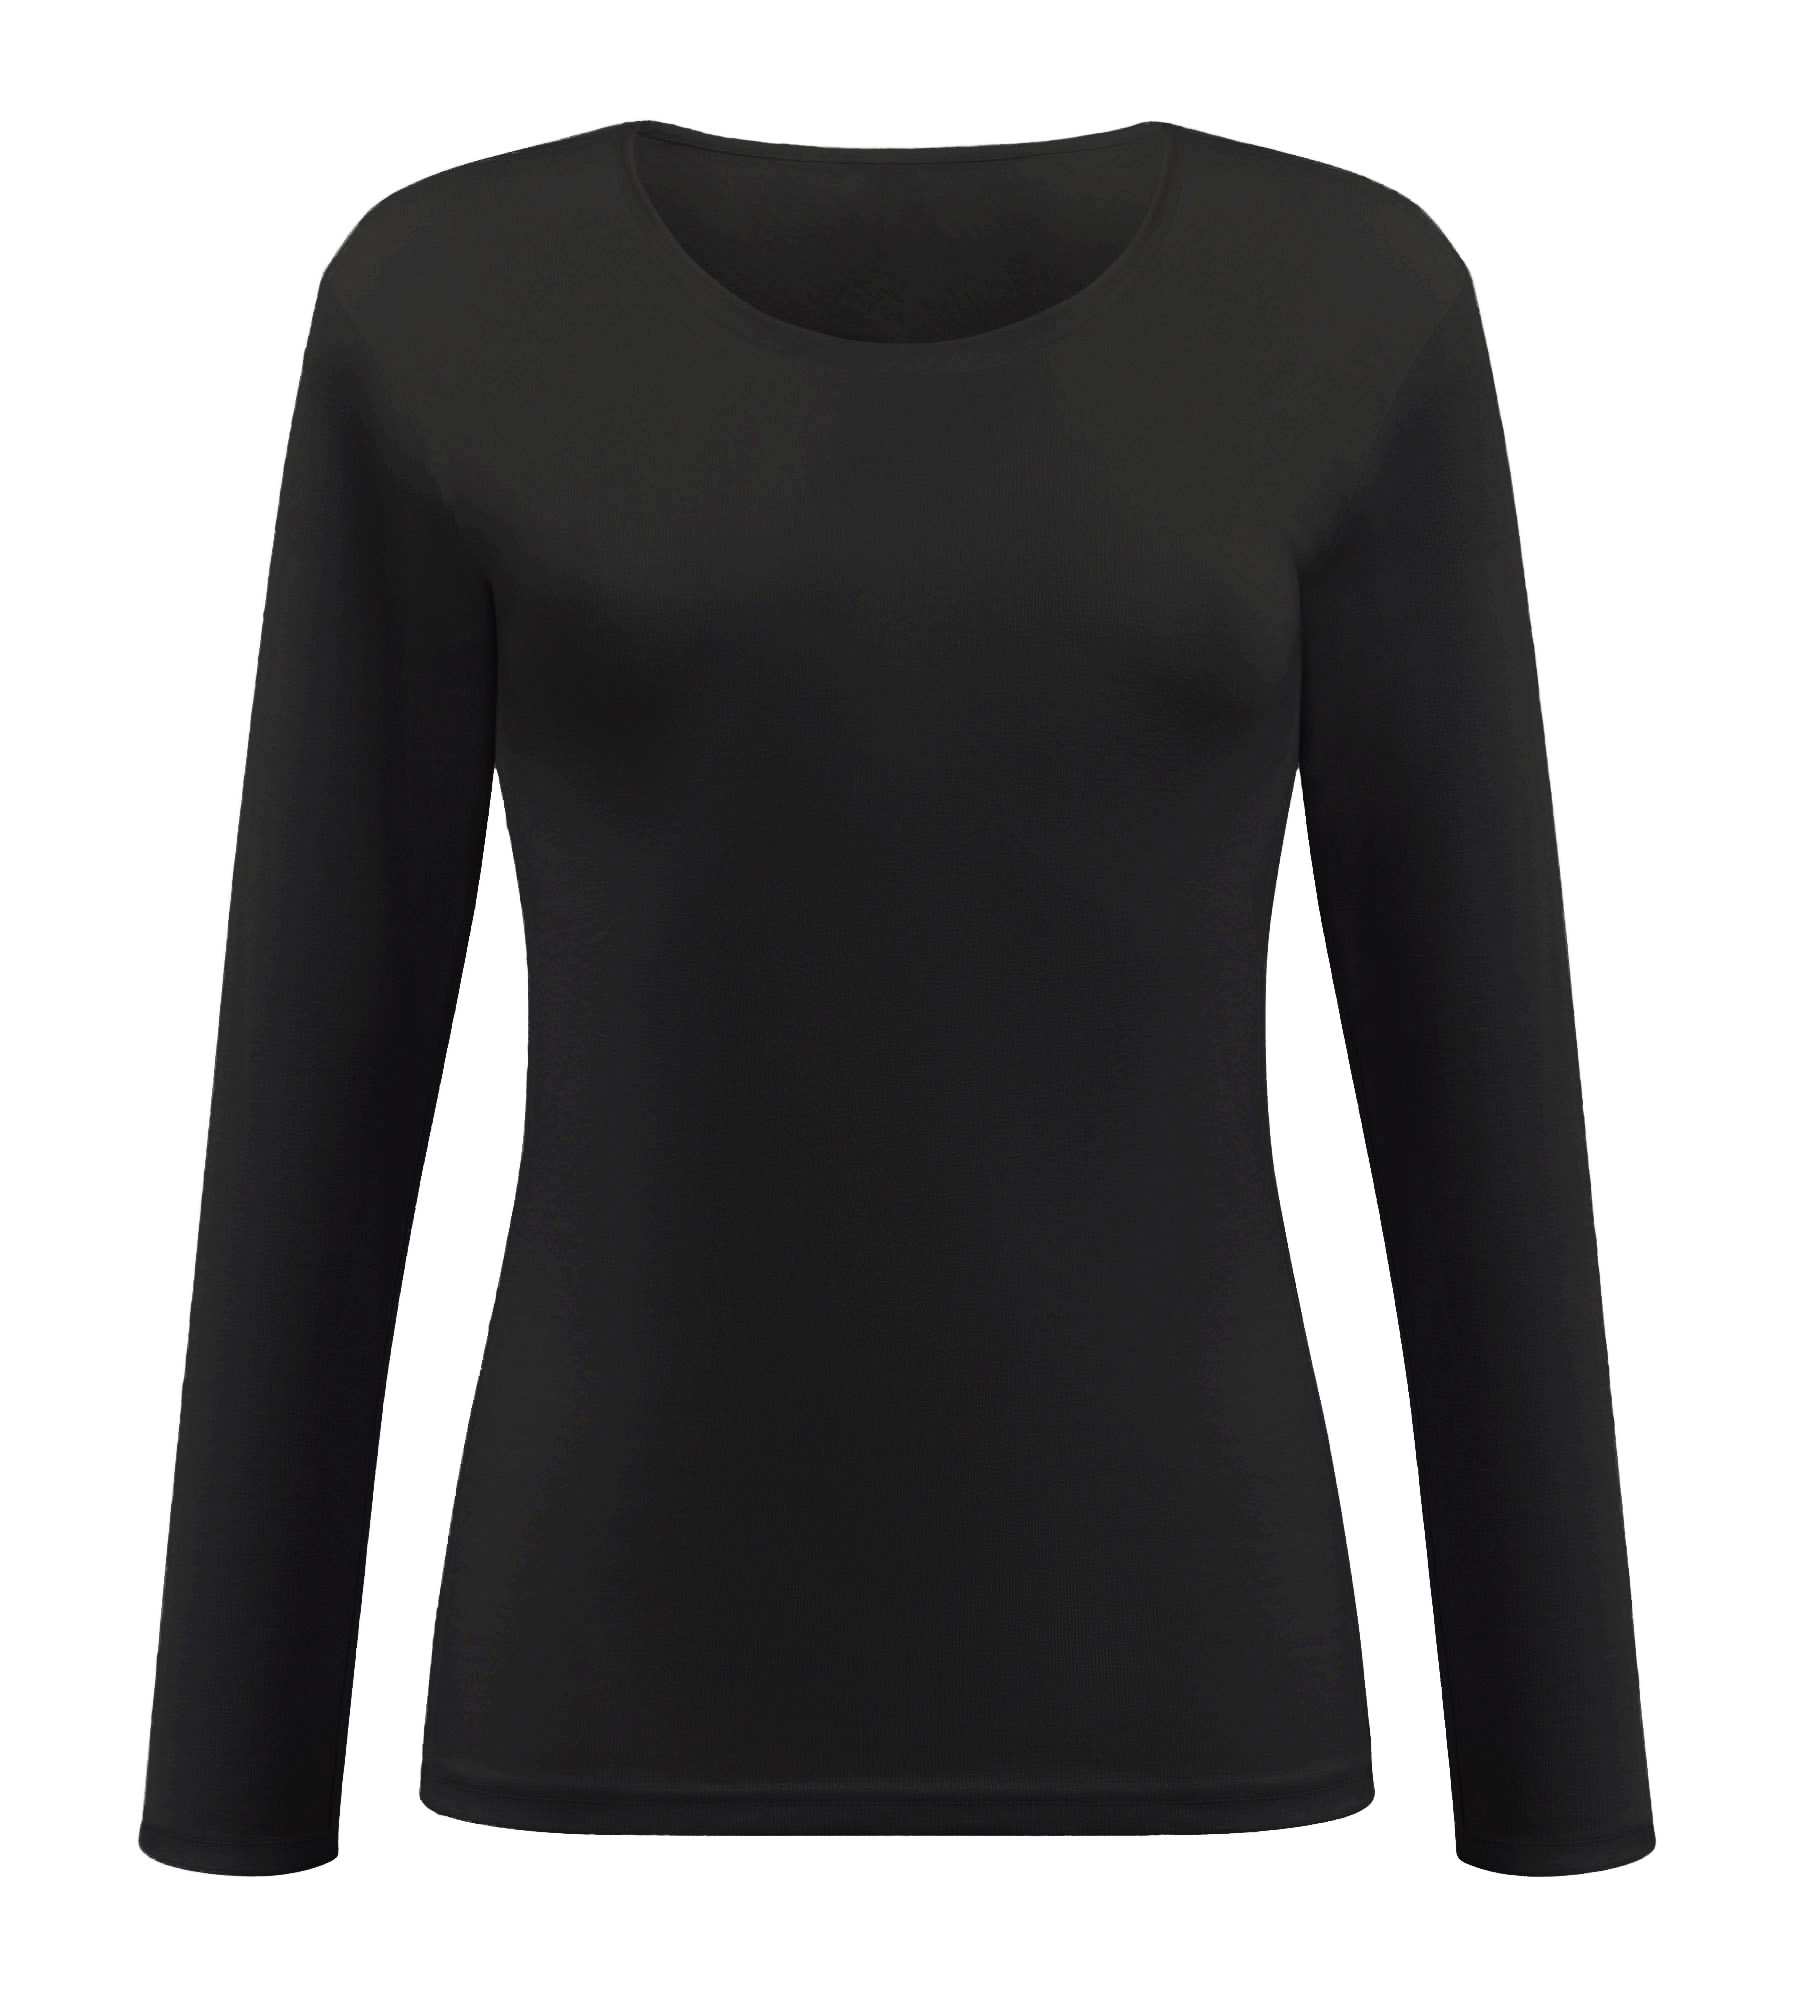 Long-sleeved t-shirt in black Thermal Tech, , PLAYTEX